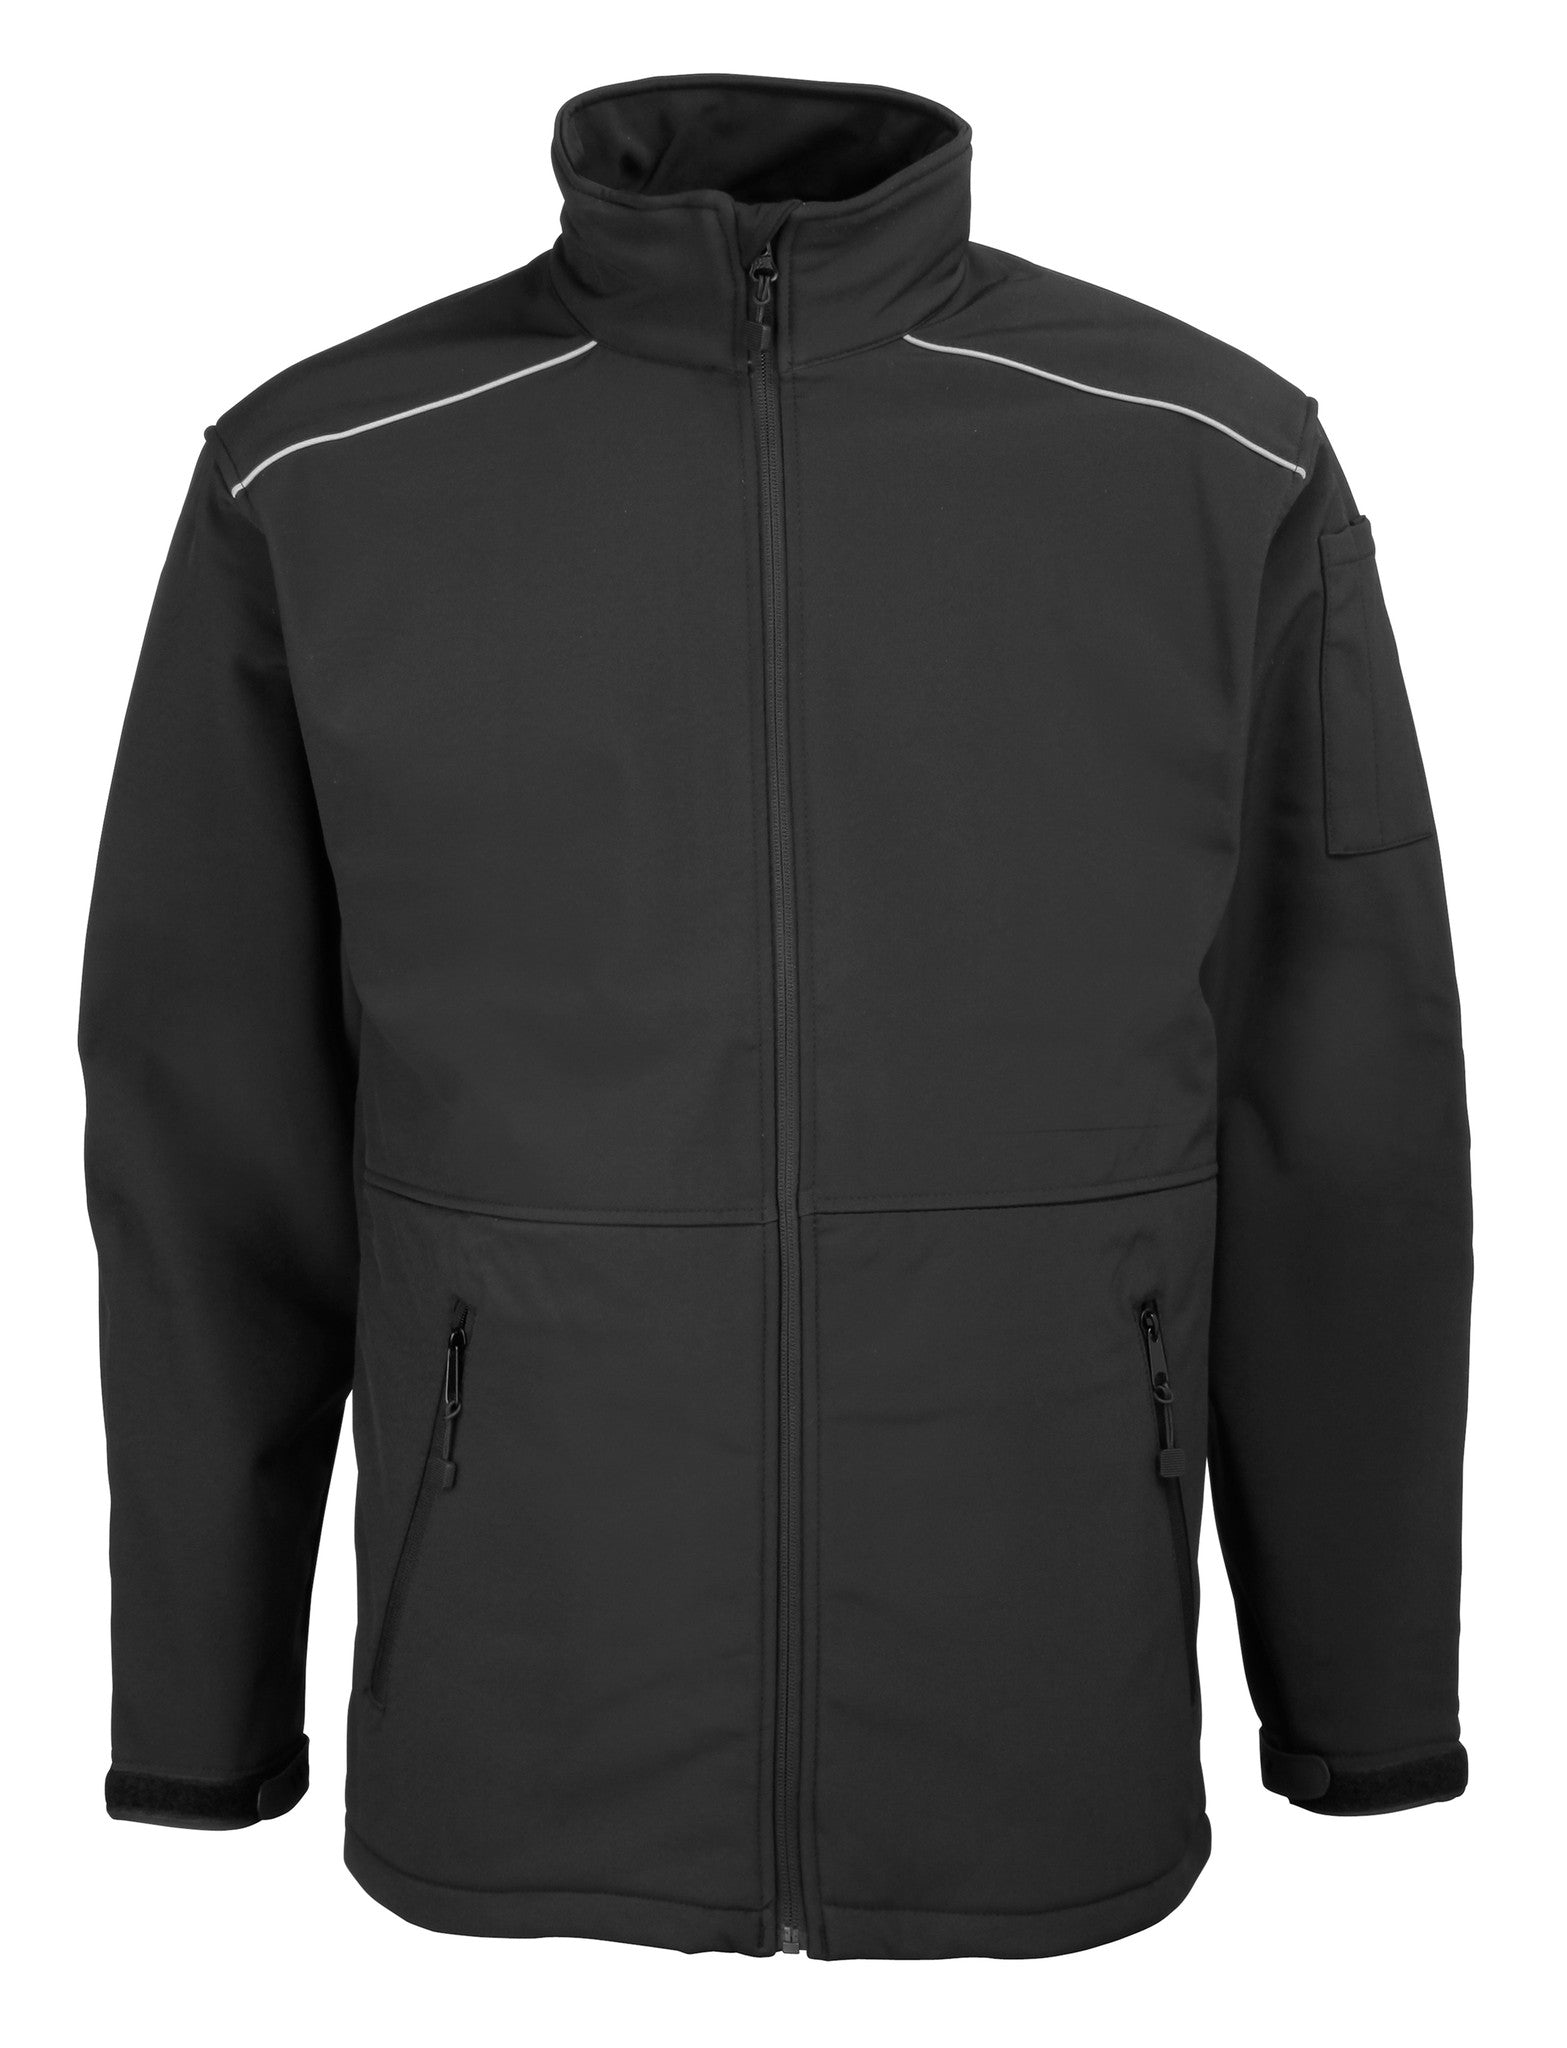 Waterproof professional jacket – YOUR CUSTOM CLOTHING